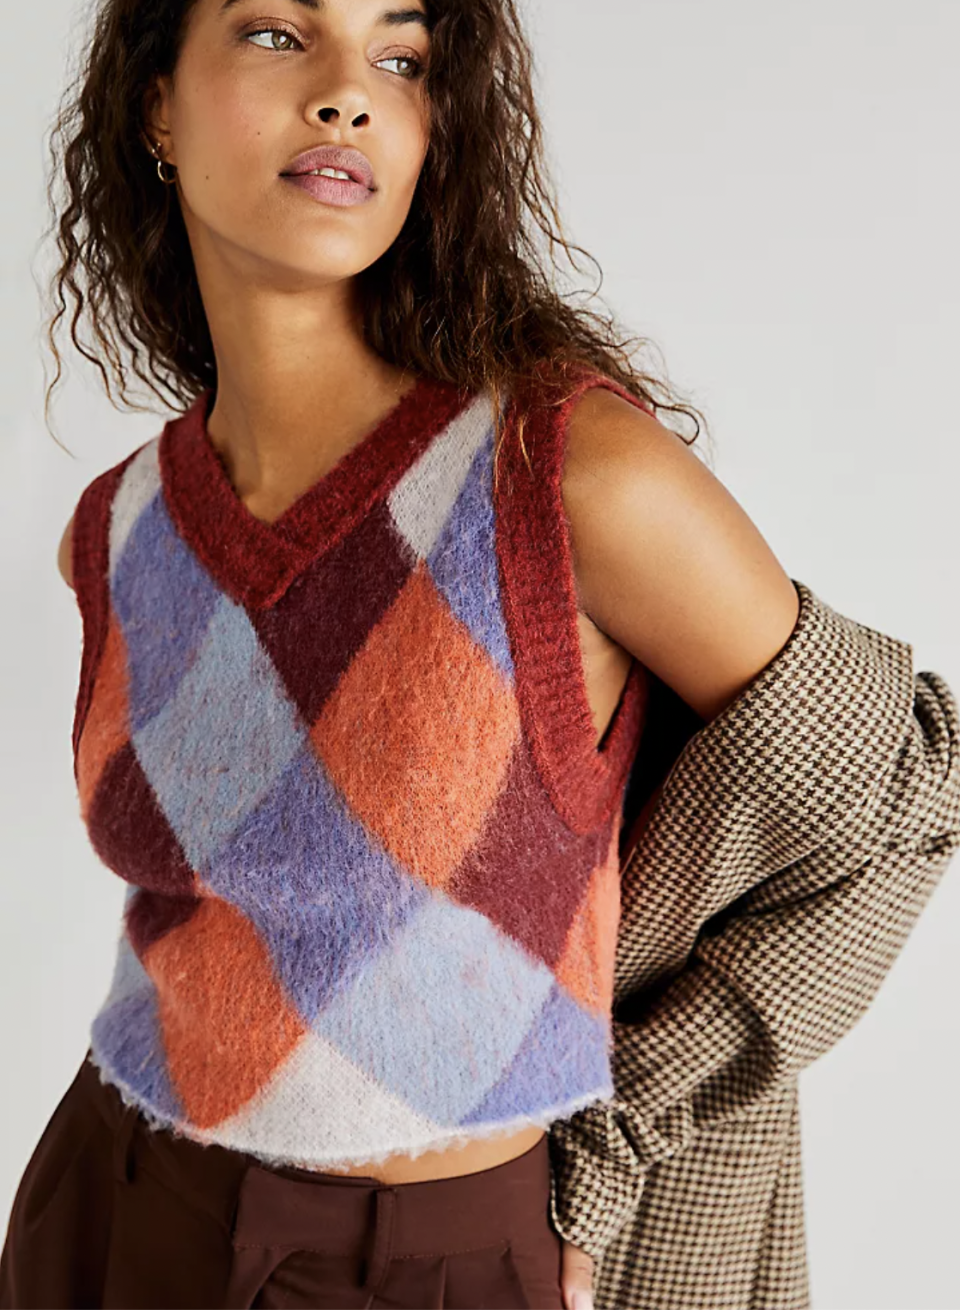 15) Quinn Sweater Vest